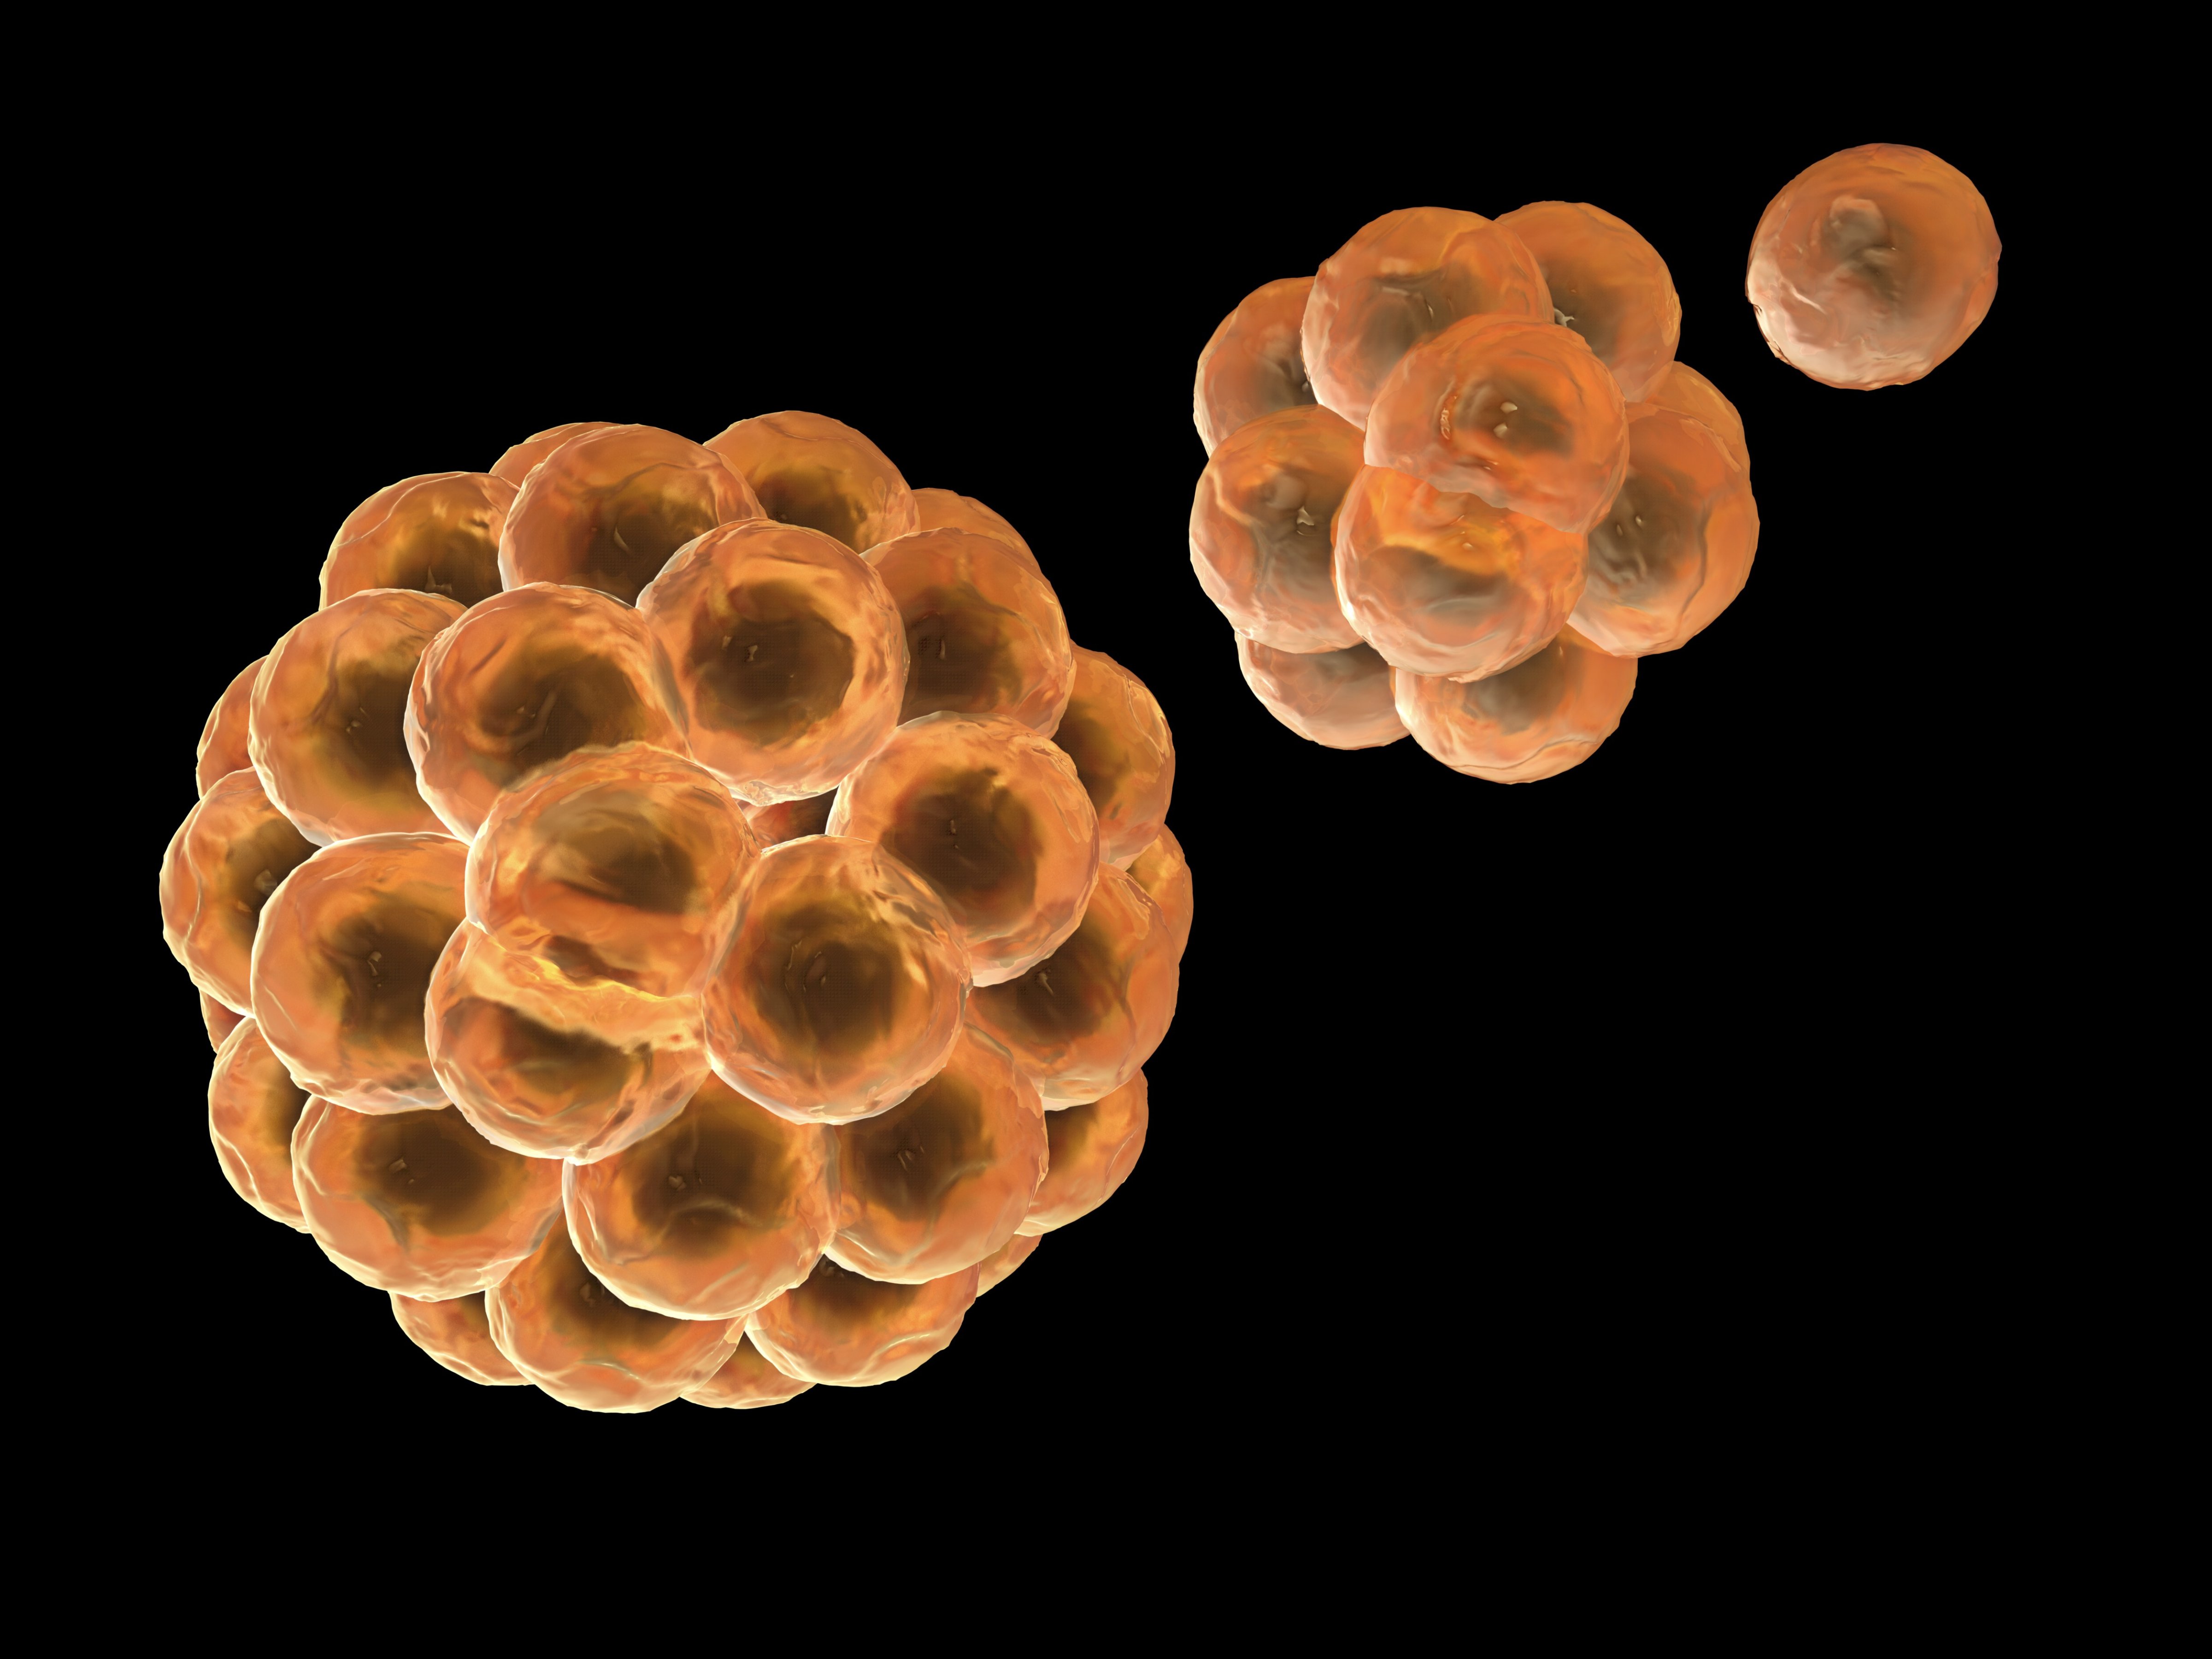 Stem cells division, computer artwork (Getty Images / Brand X)